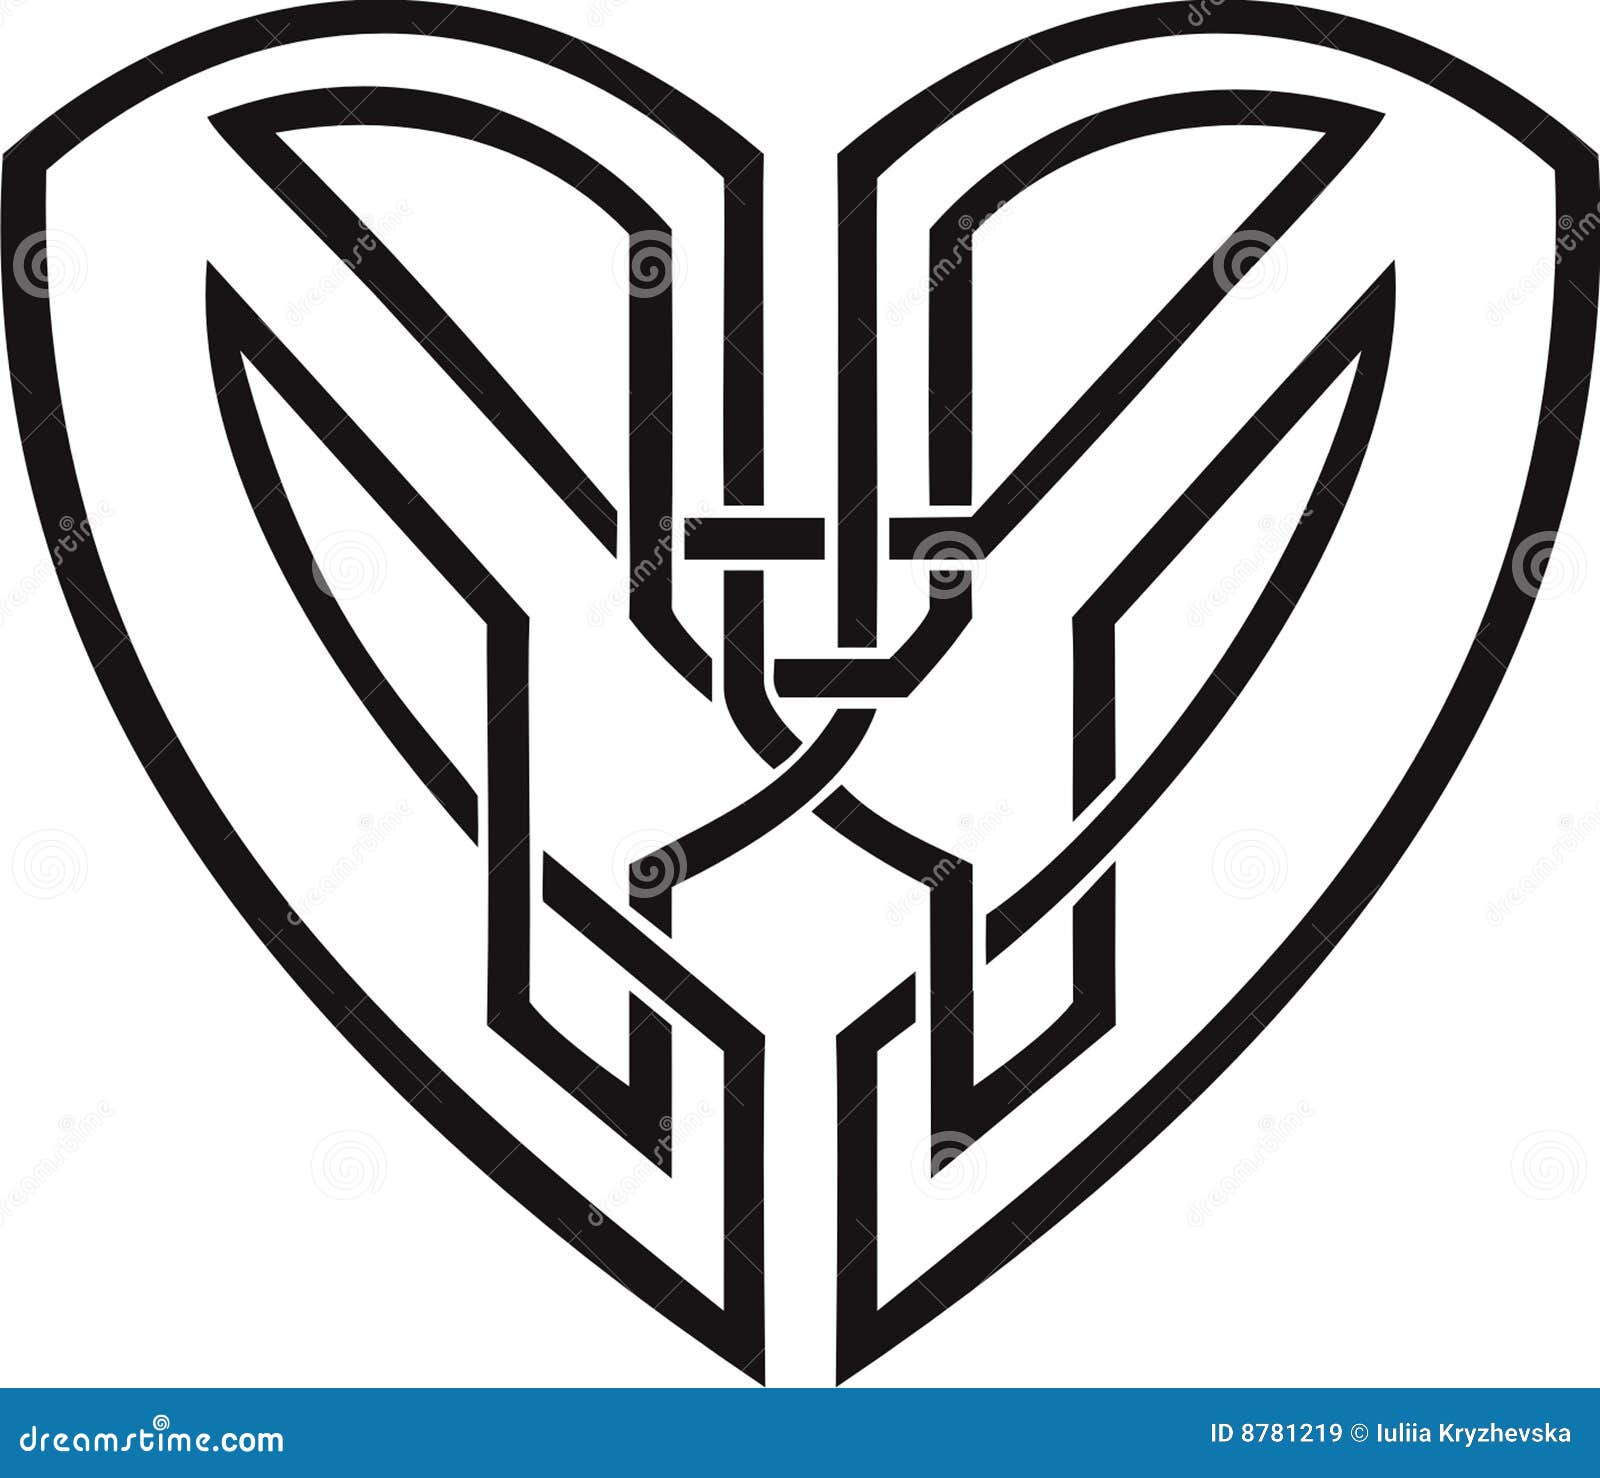 Celtic heart stock vector. Illustration of contour, ornament - 8781219